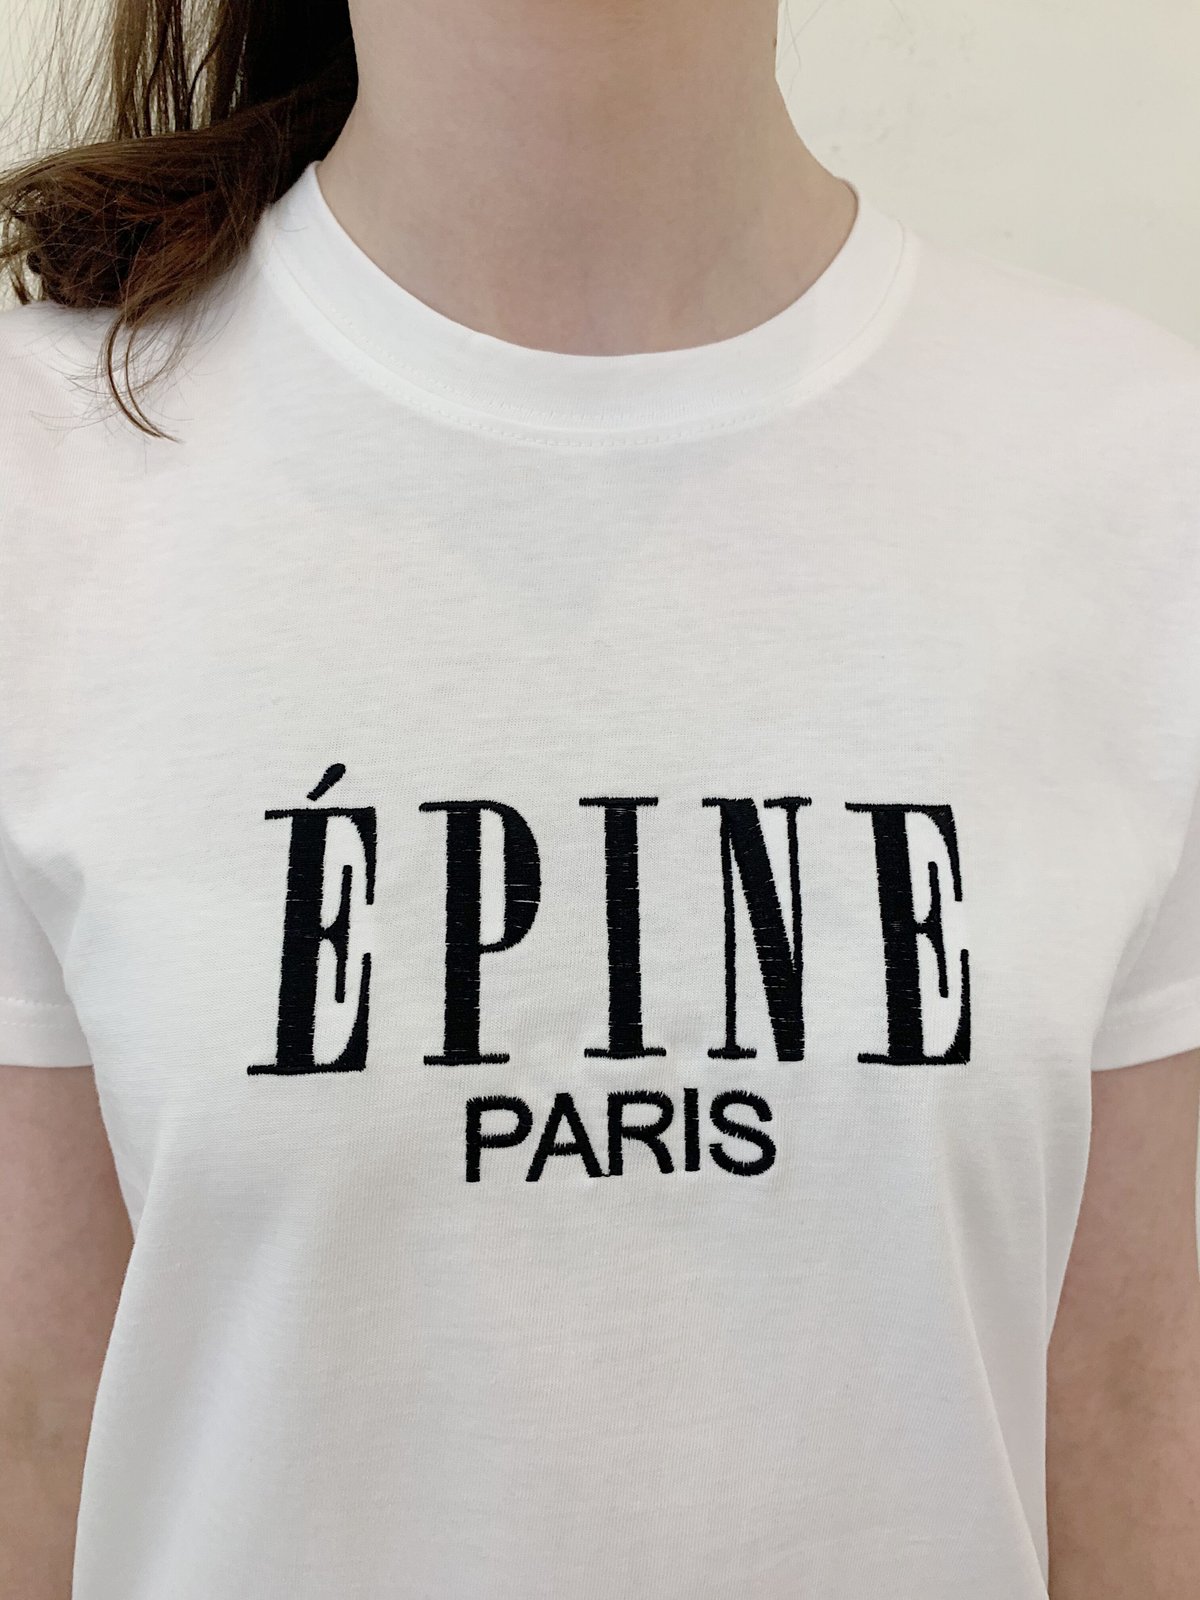 ÉPINE PARIS embroidery tee white×black | épine